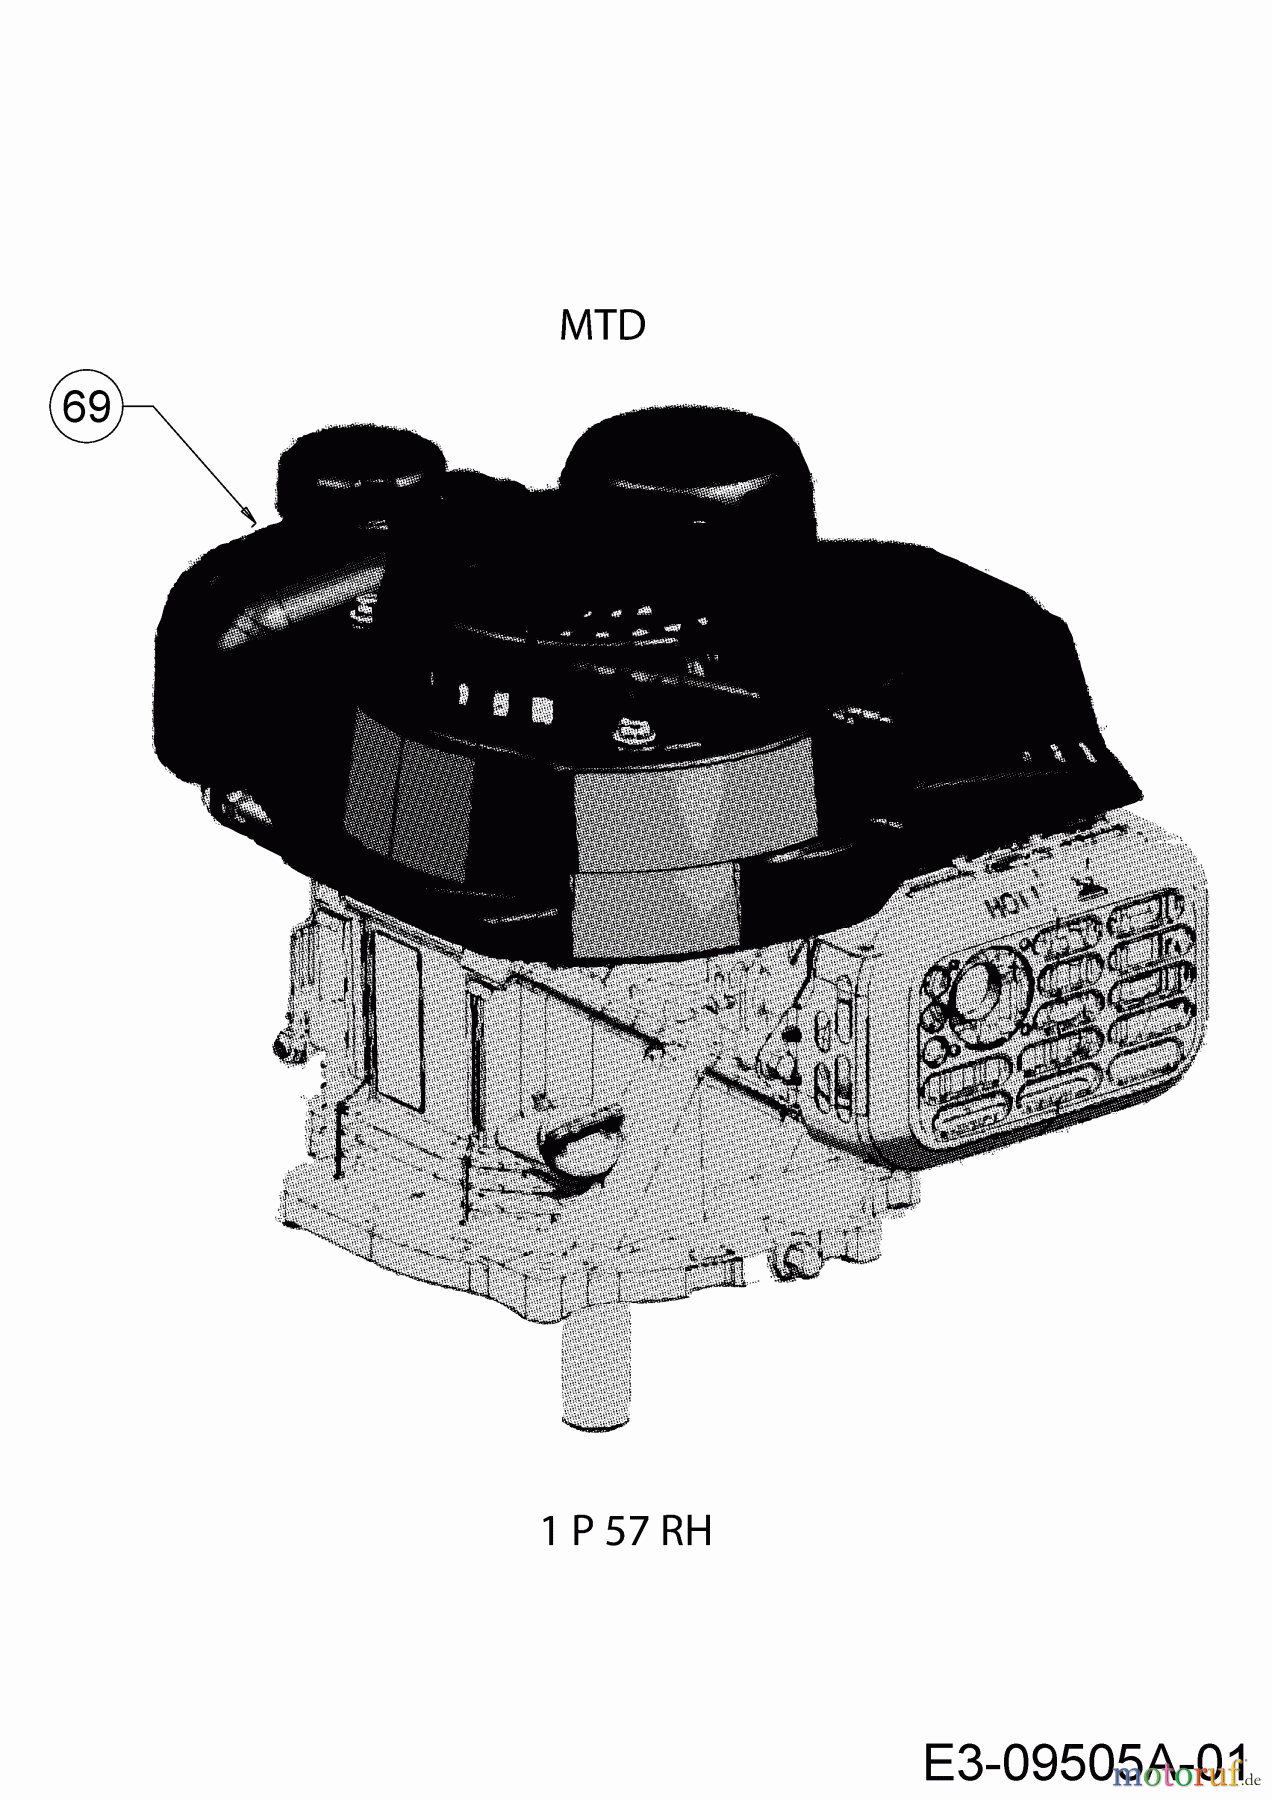  MTD Motormäher mit Antrieb DL 460 S 12A-TCSJ677  (2017) Motor MTD